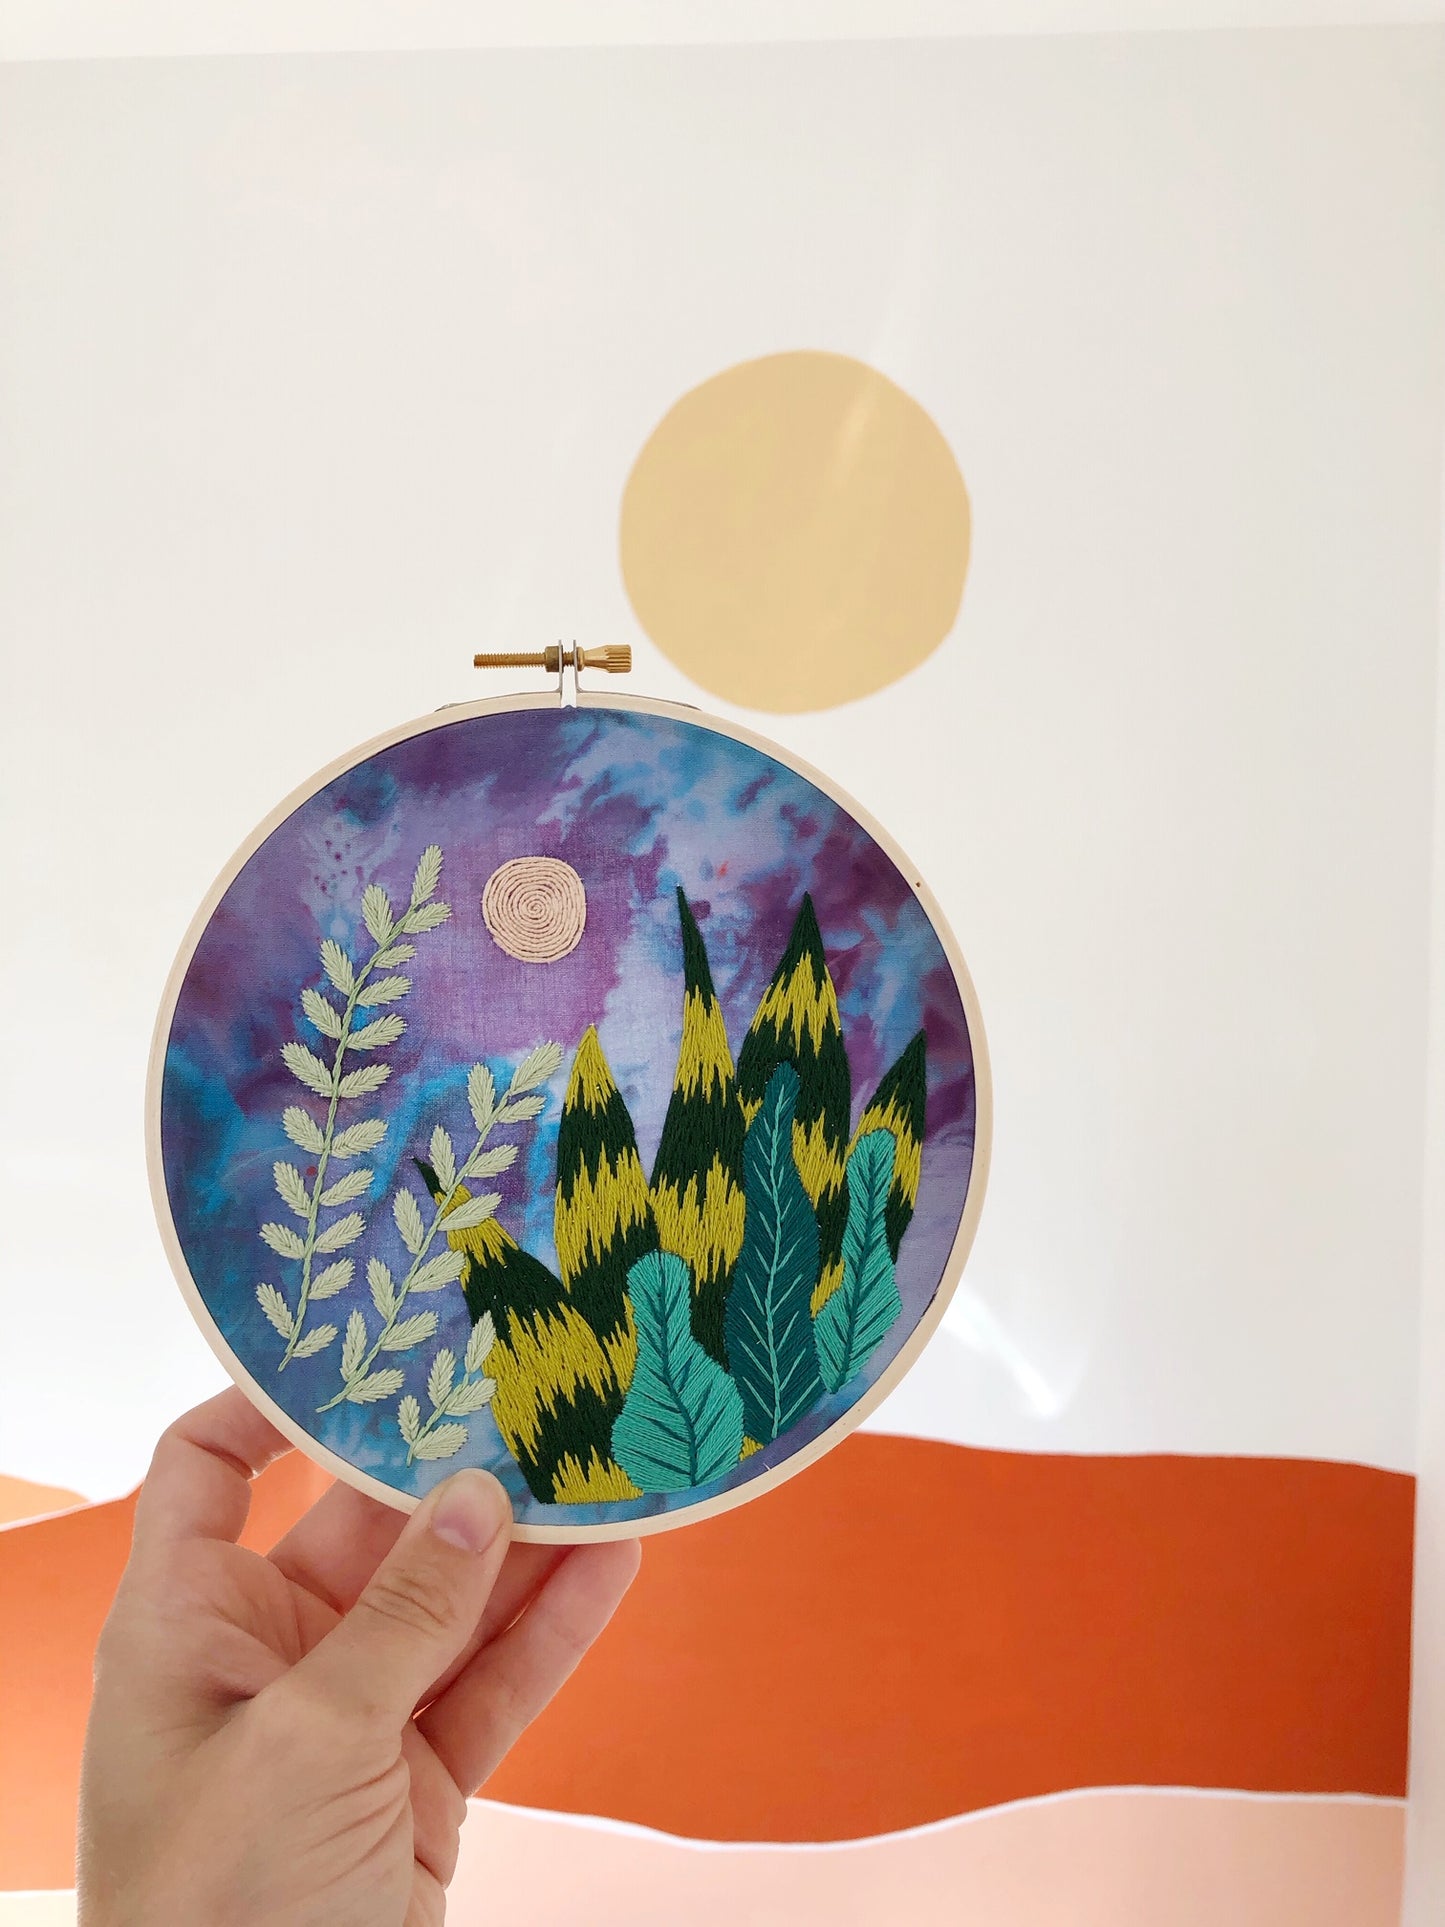 Night Plants - Beginner Hand Embroidery Pattern PDF